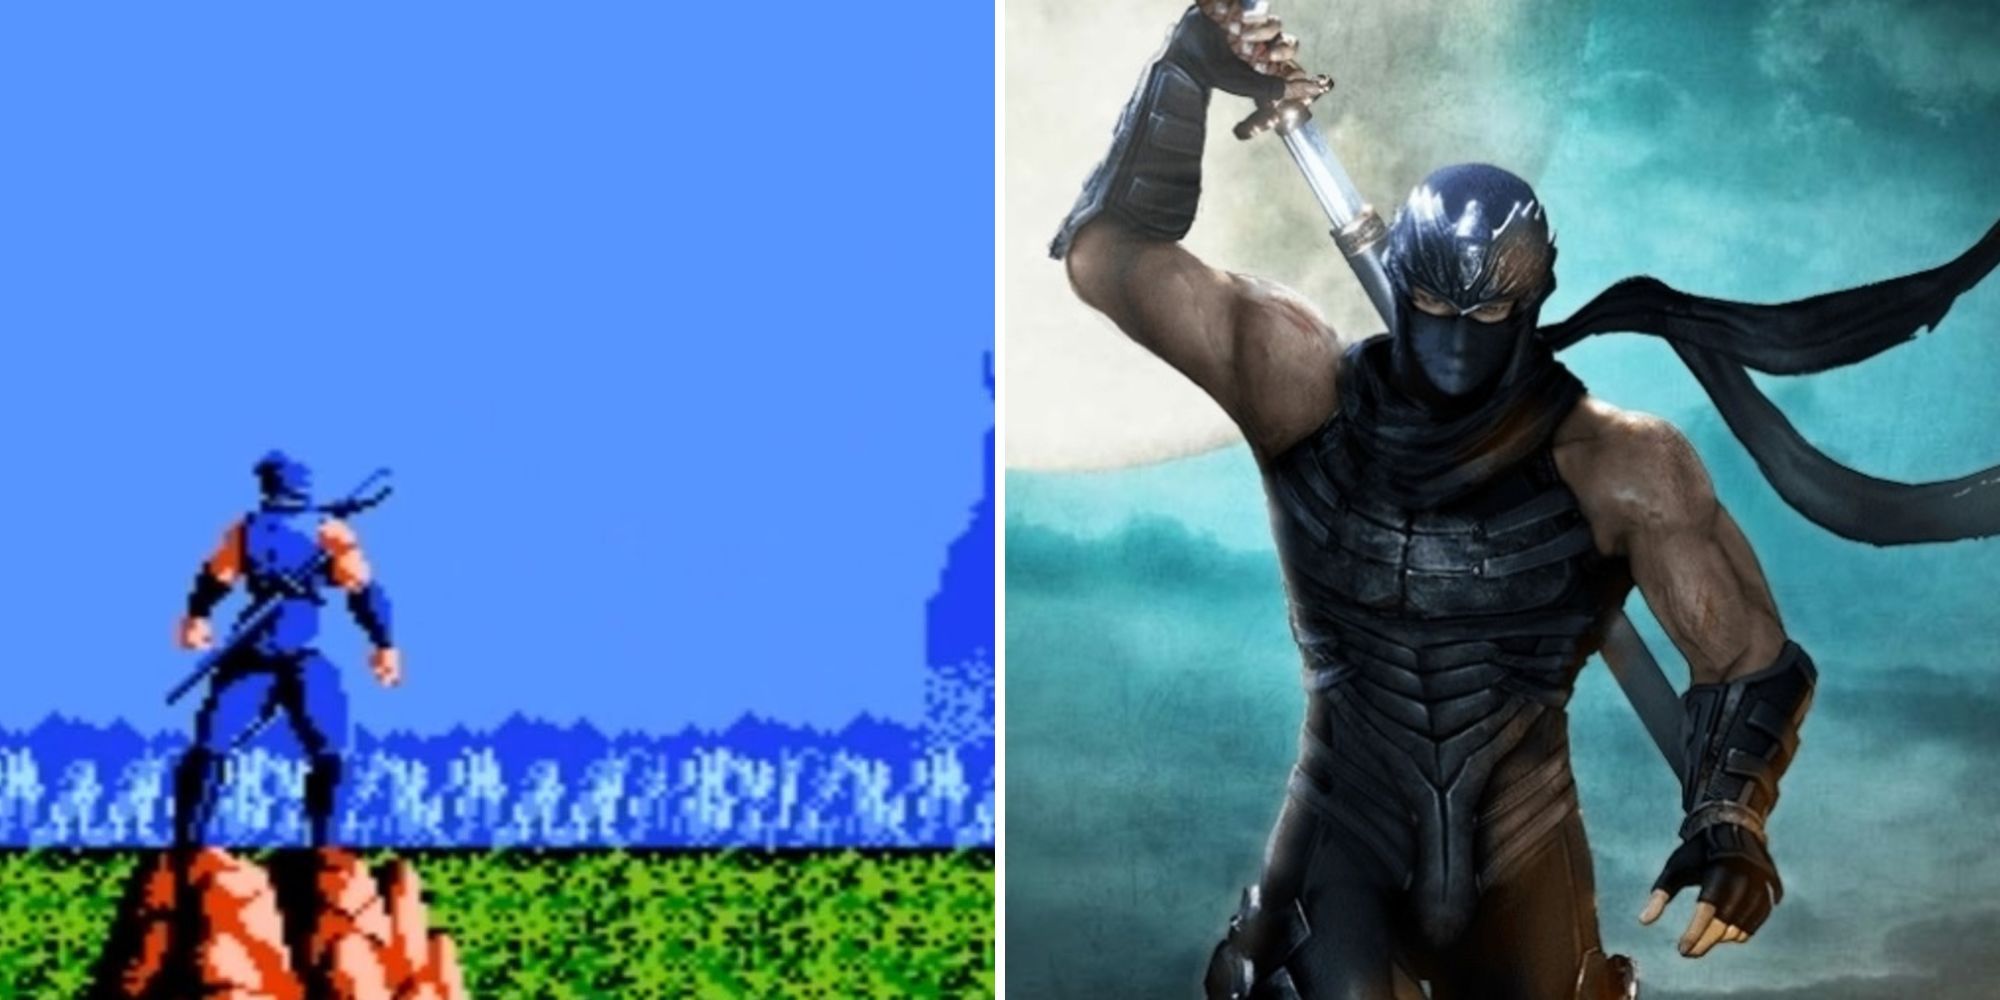 Pixel Ninja Gaiden character on the left and 3D Ninja Gaiden character walking on the right